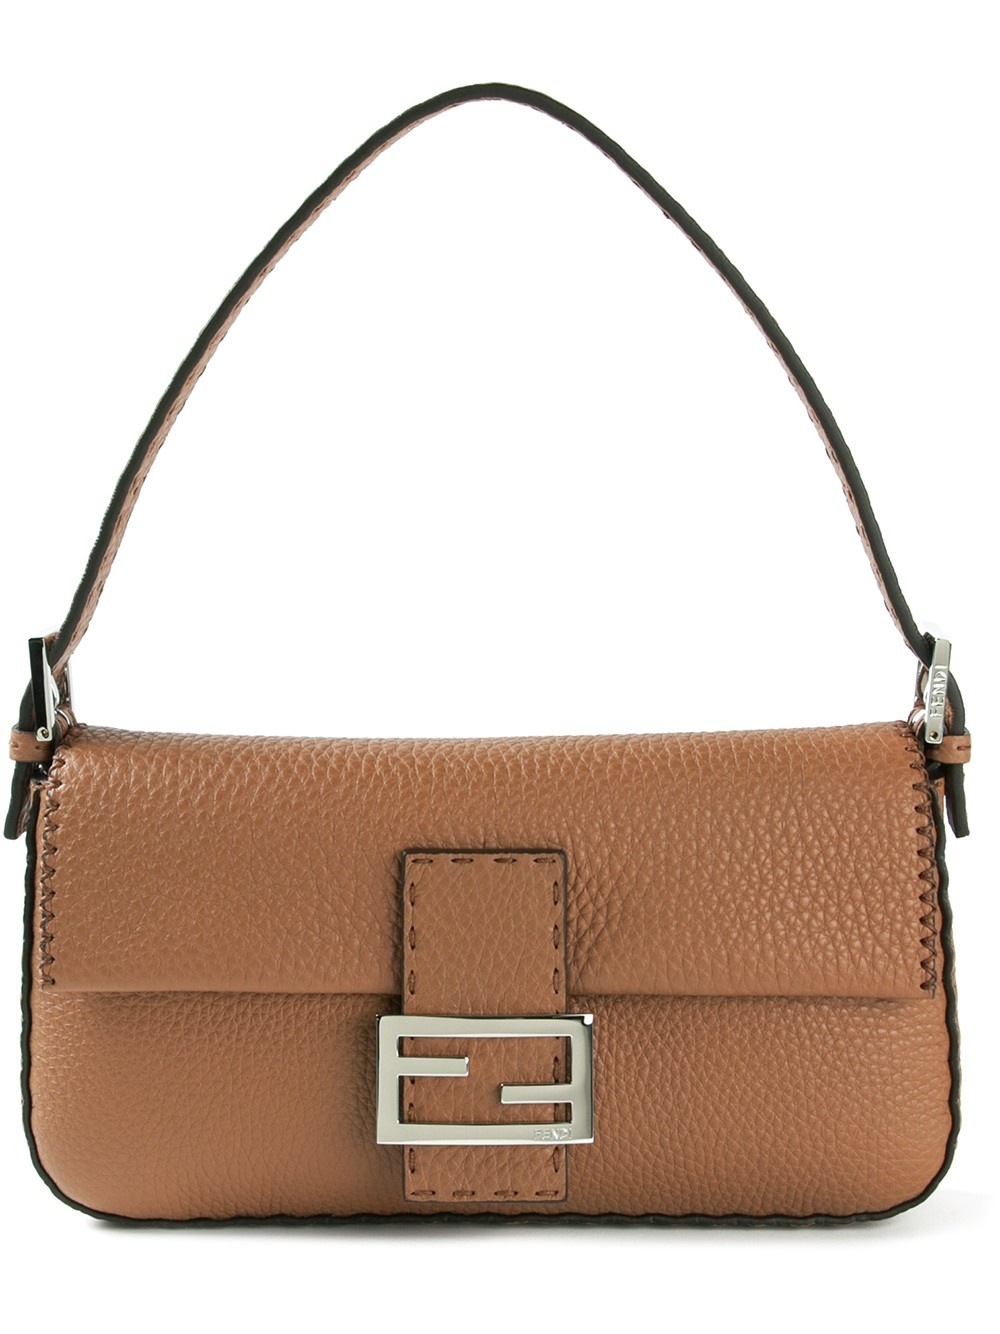 Lyst - Fendi Shoulder Bag in Brown